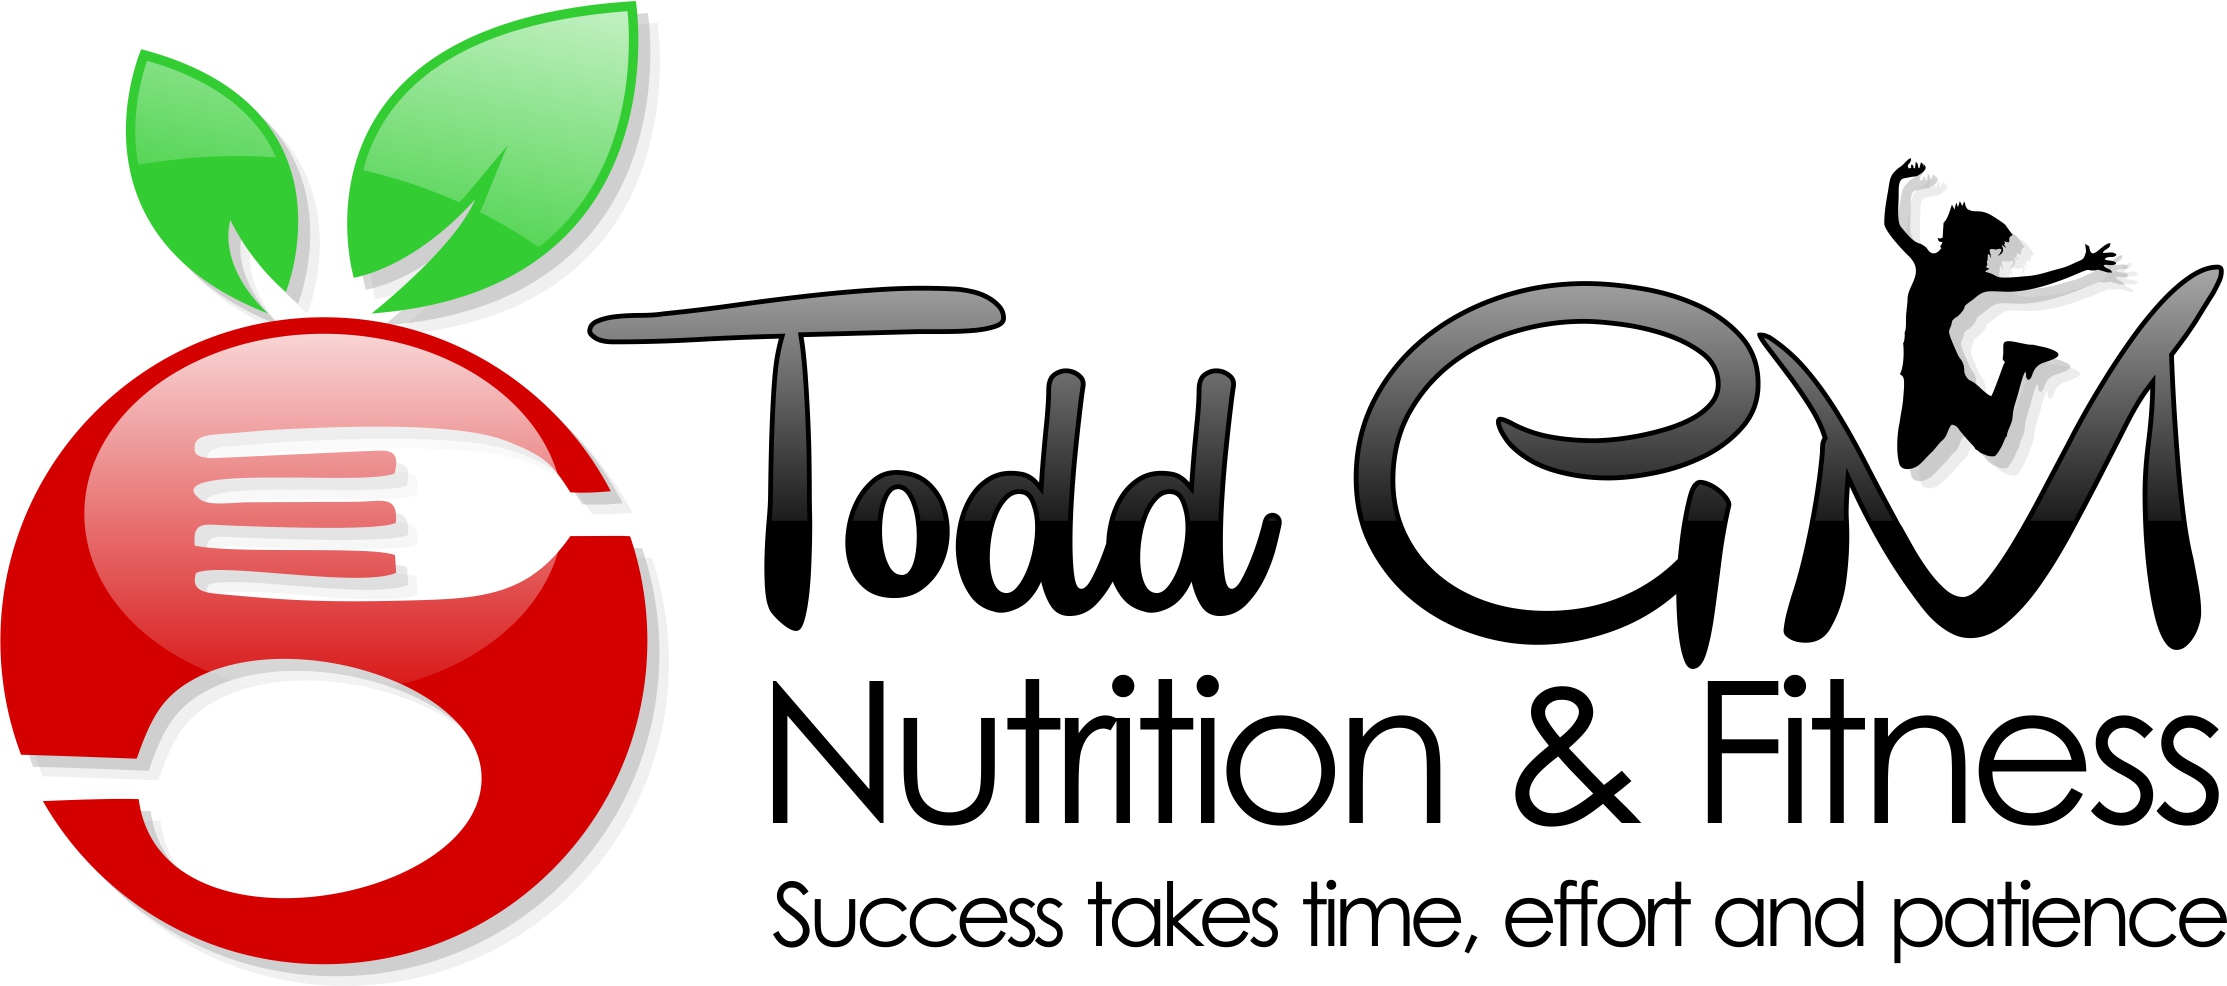 Todd GM Nutrition & Fitness logo